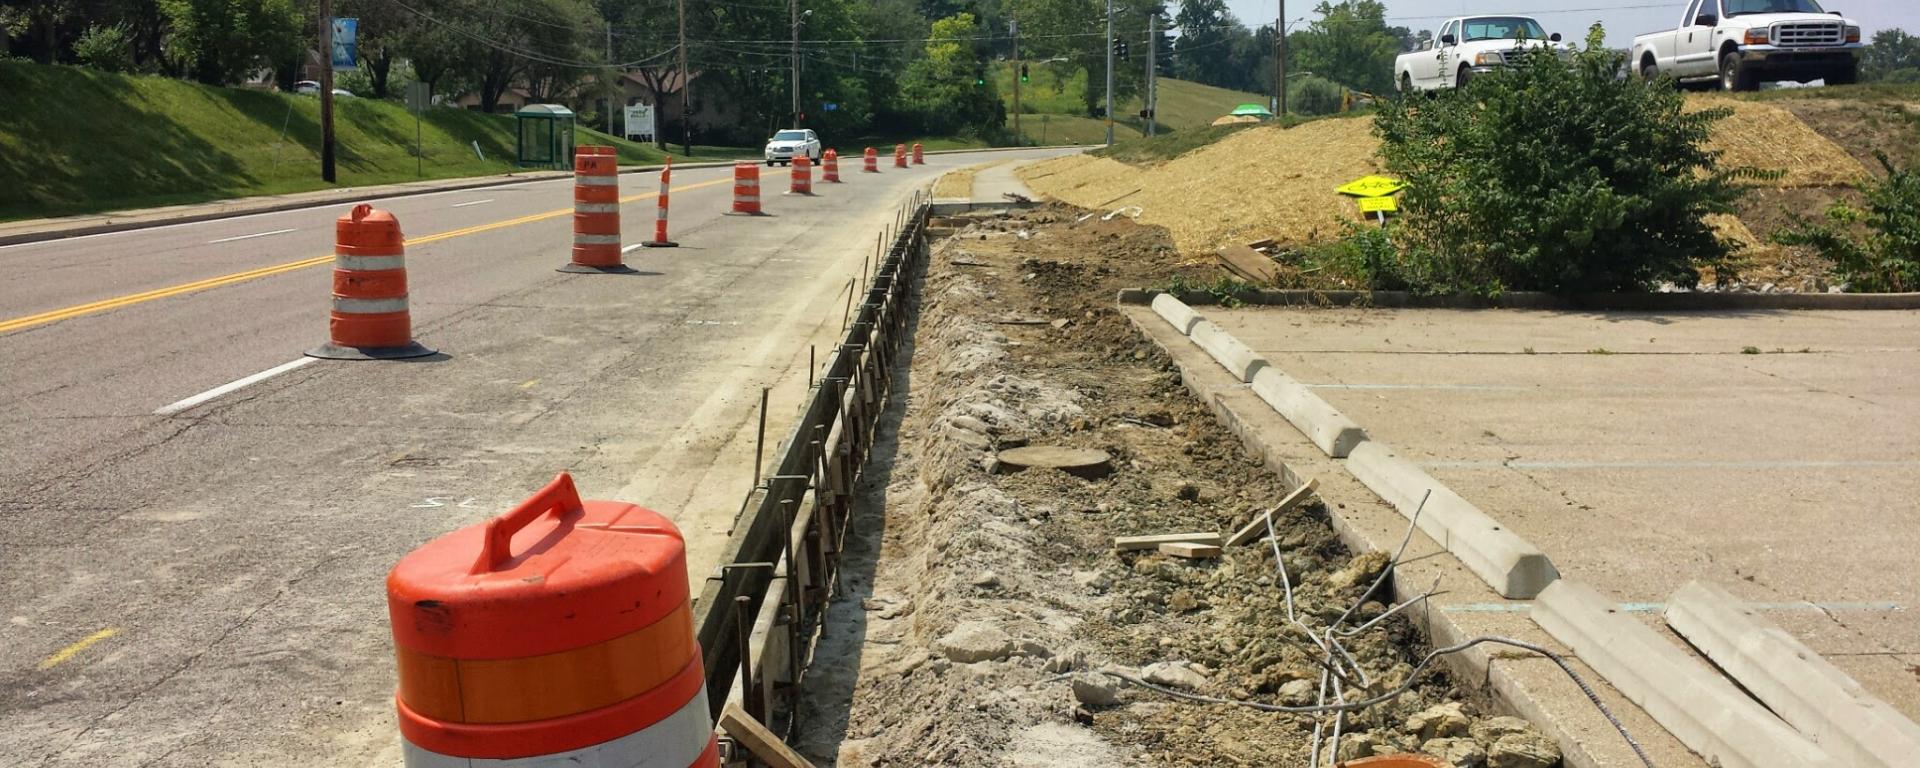 sidewalk during construction